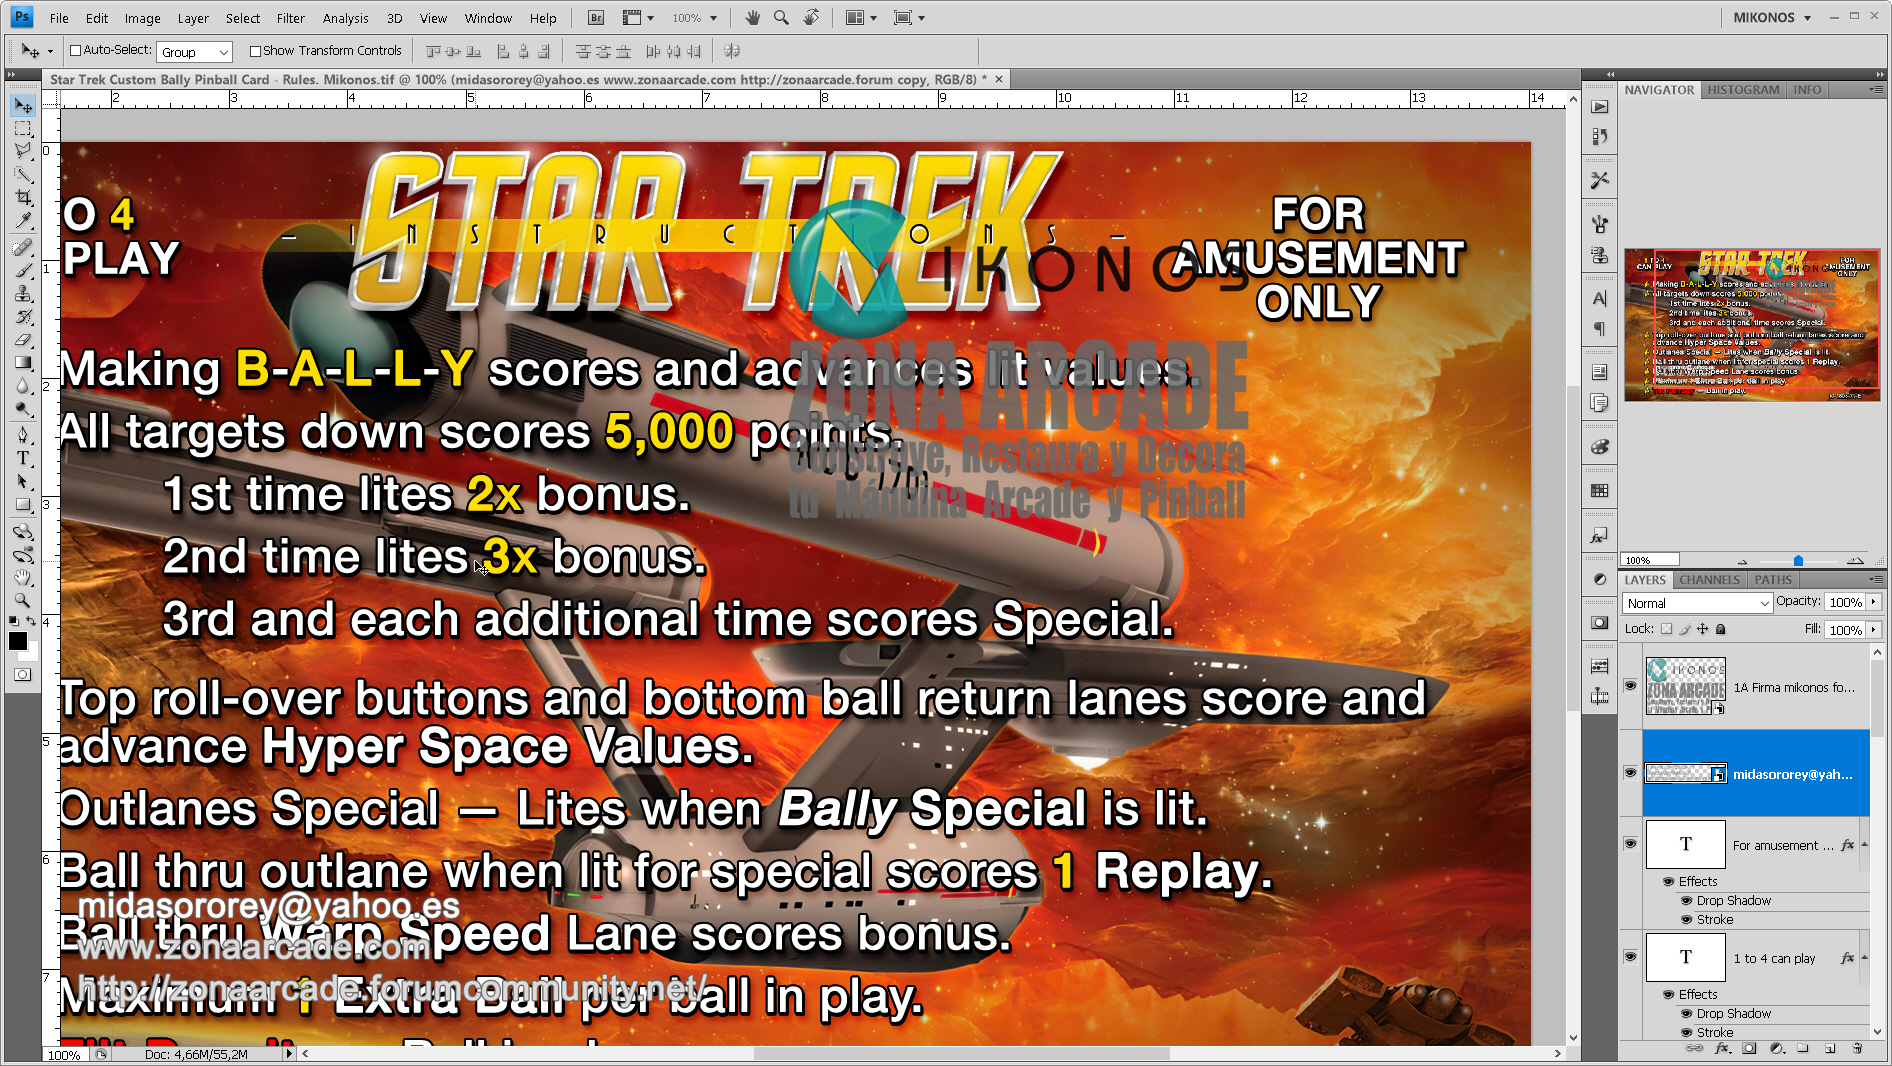 Star Trek Custom Pinball Card - Rules. Mikonos2